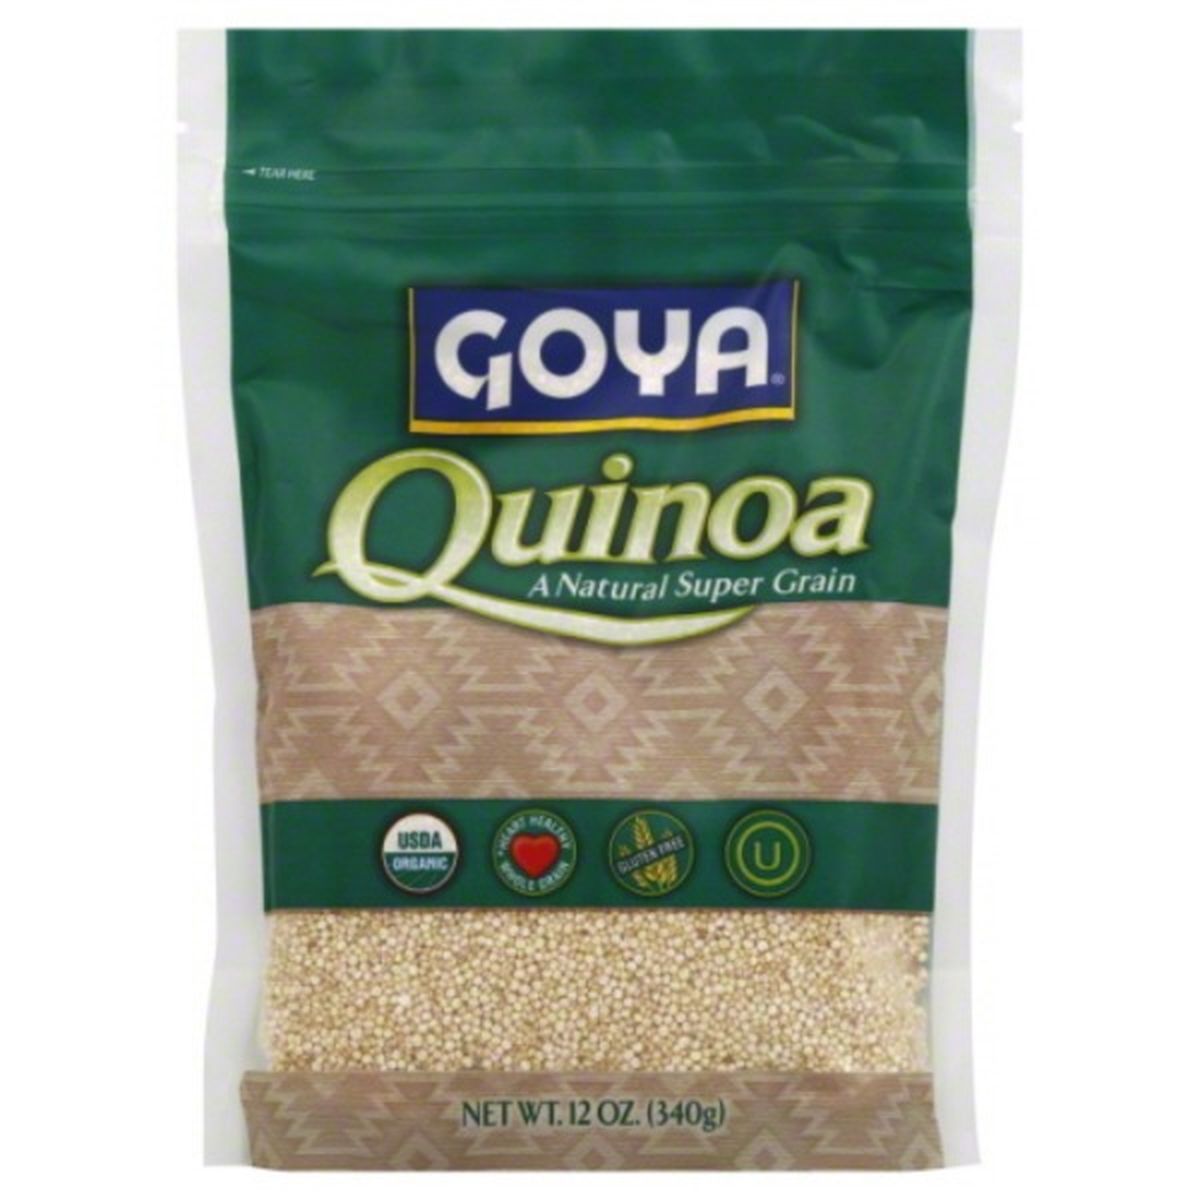 Calories in Goya Quinoa